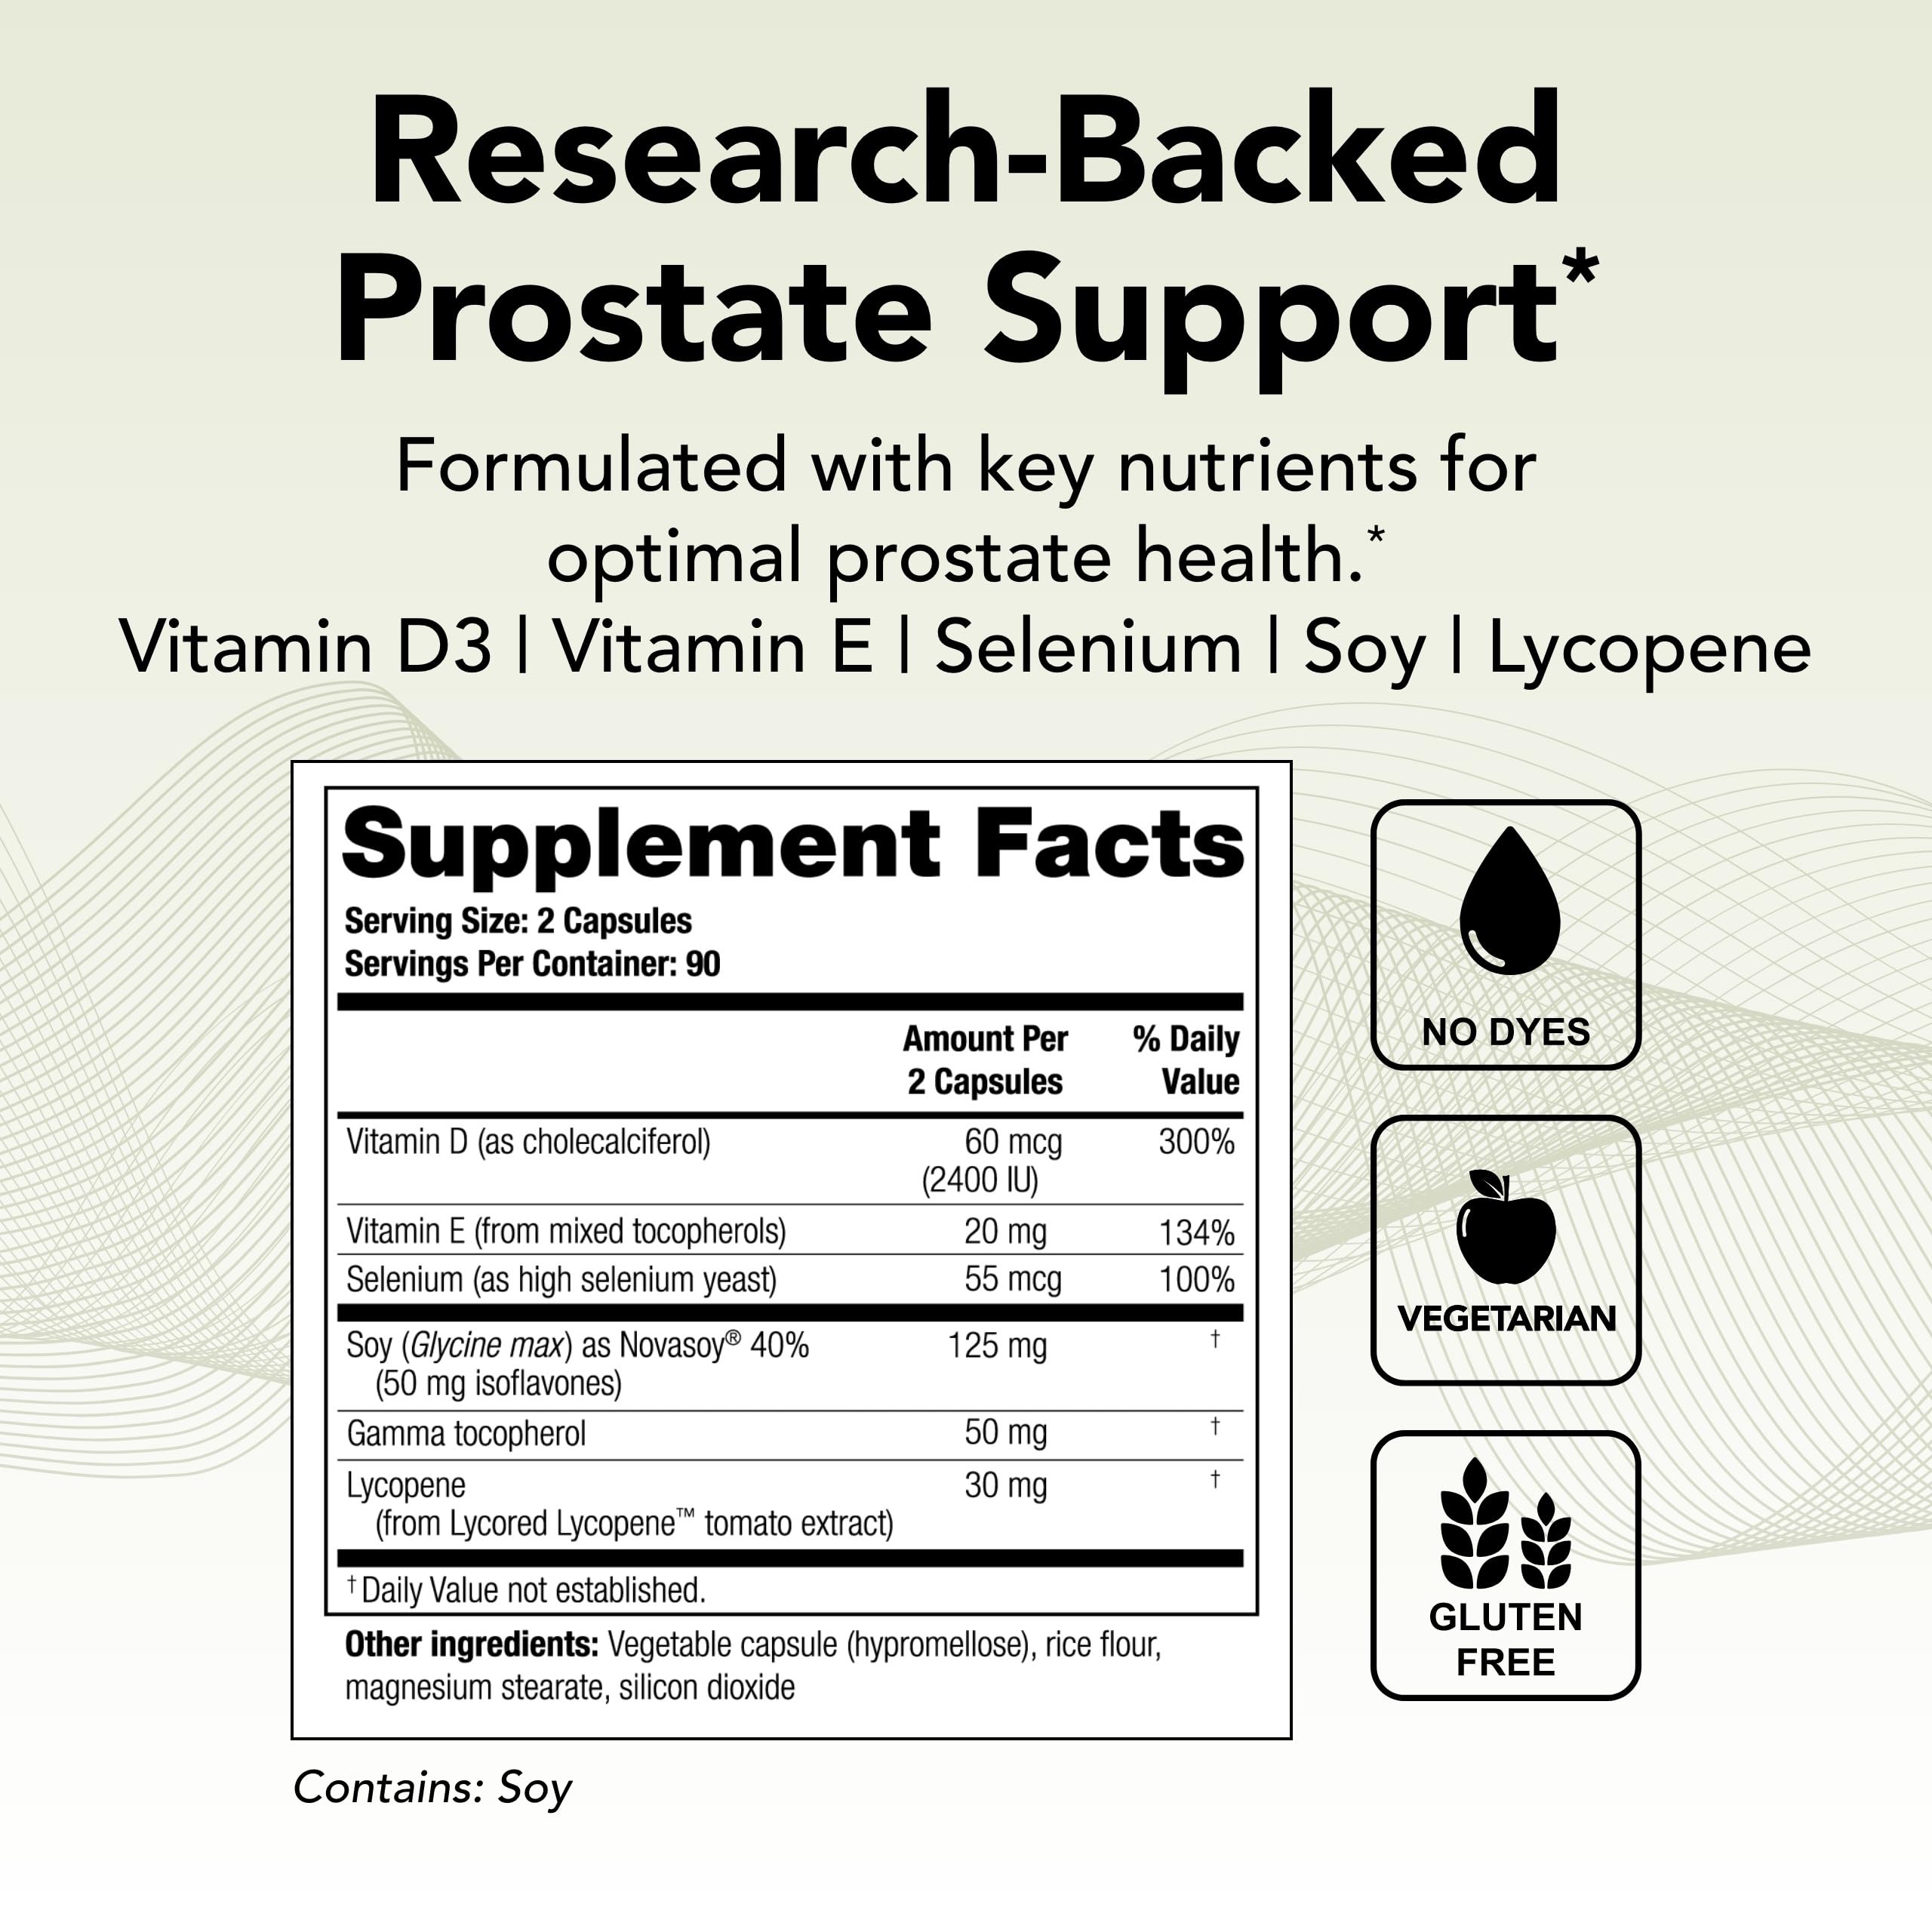 Theralogix Prostate SR + Prostate 2.4 Bundle - Saw Palmetto Supplement & Prostate Tissue Health Supplement (90 Day Supply)